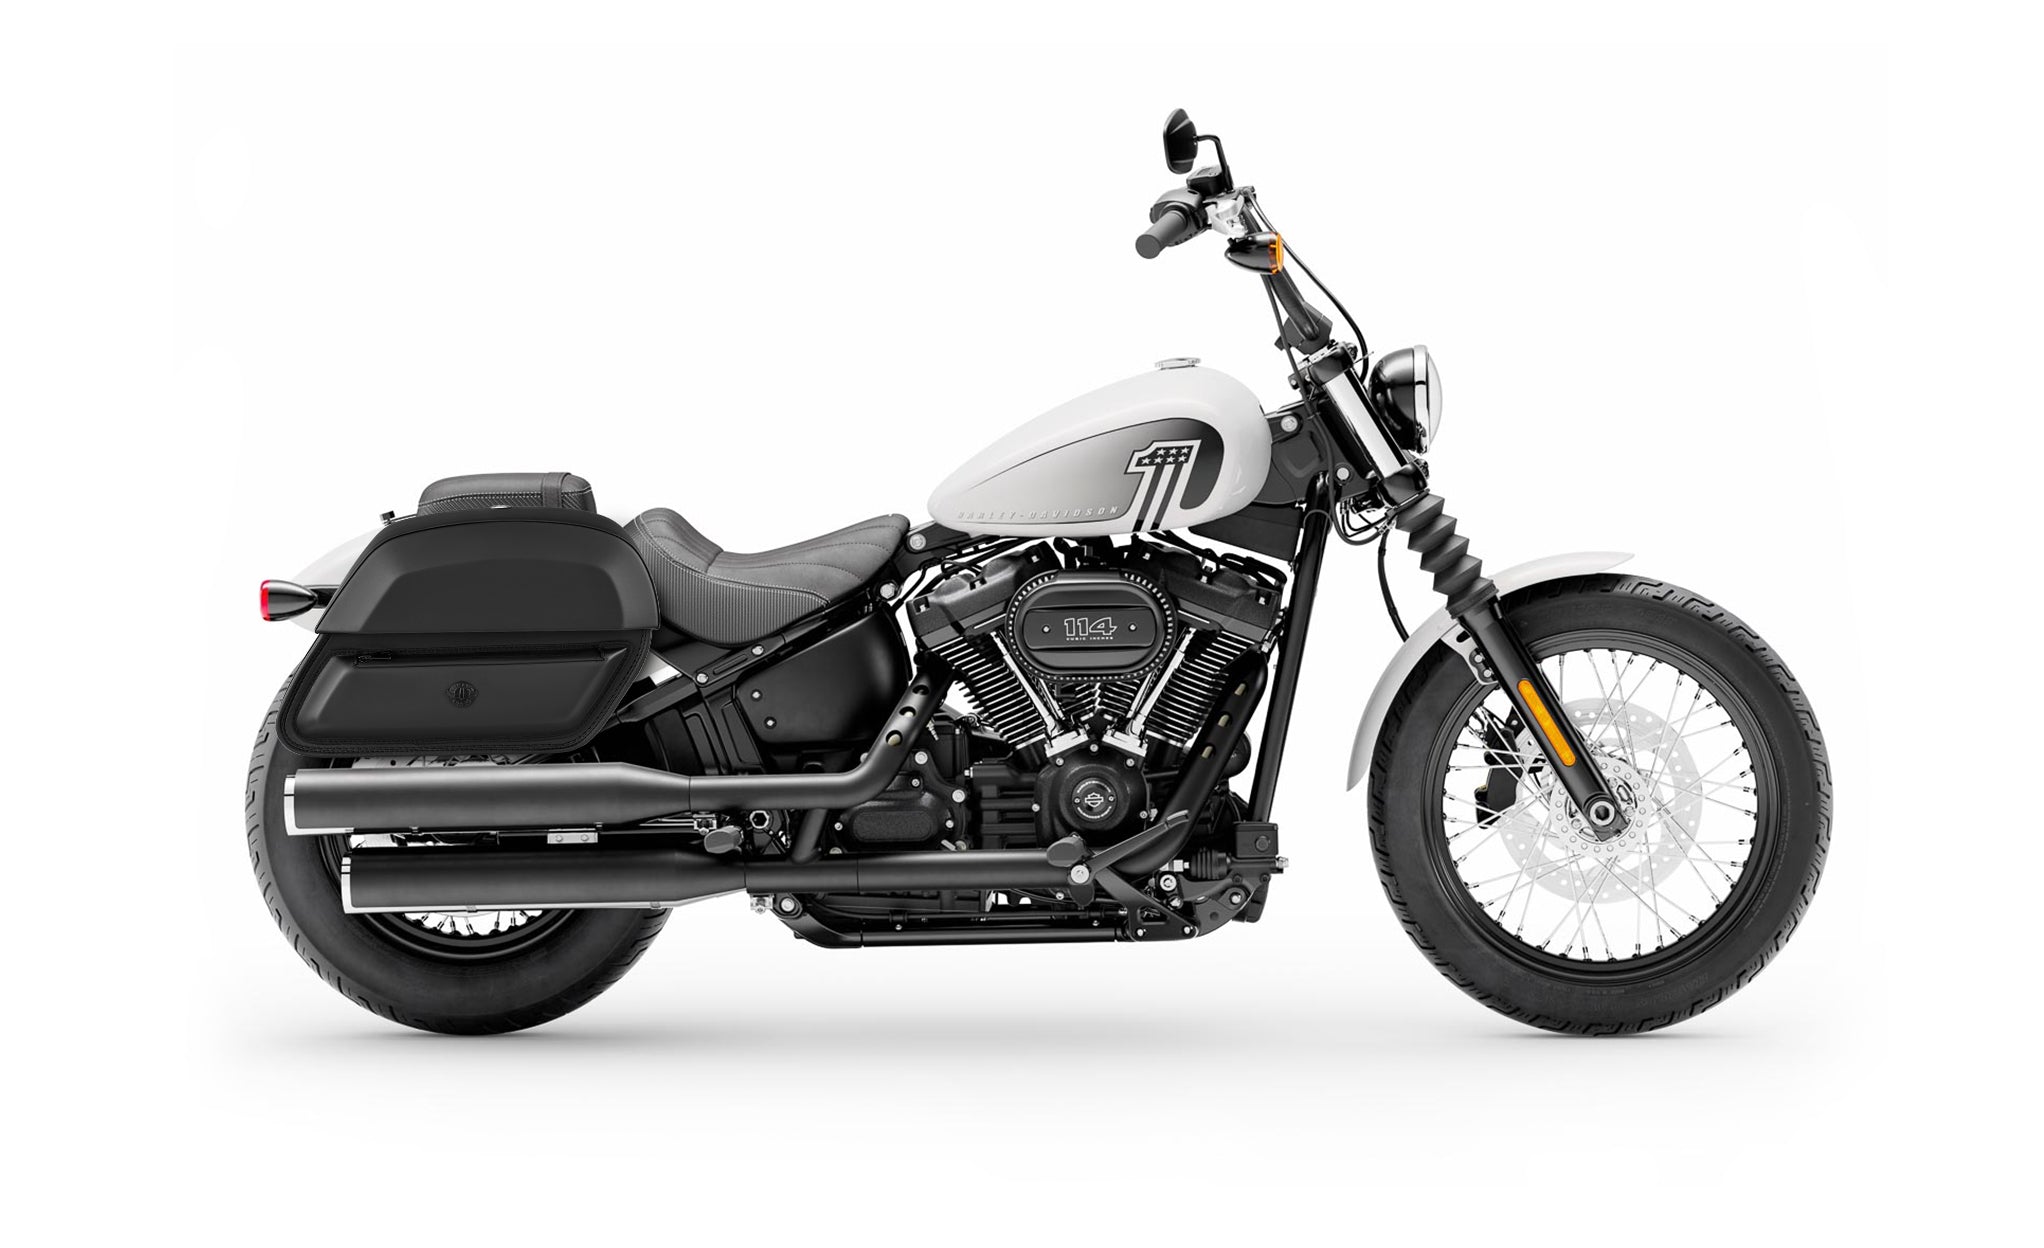 28L - Wraith Medium Leather Saddlebags for Harley Softail Street Bob FXBB BAG on Bike View @expand